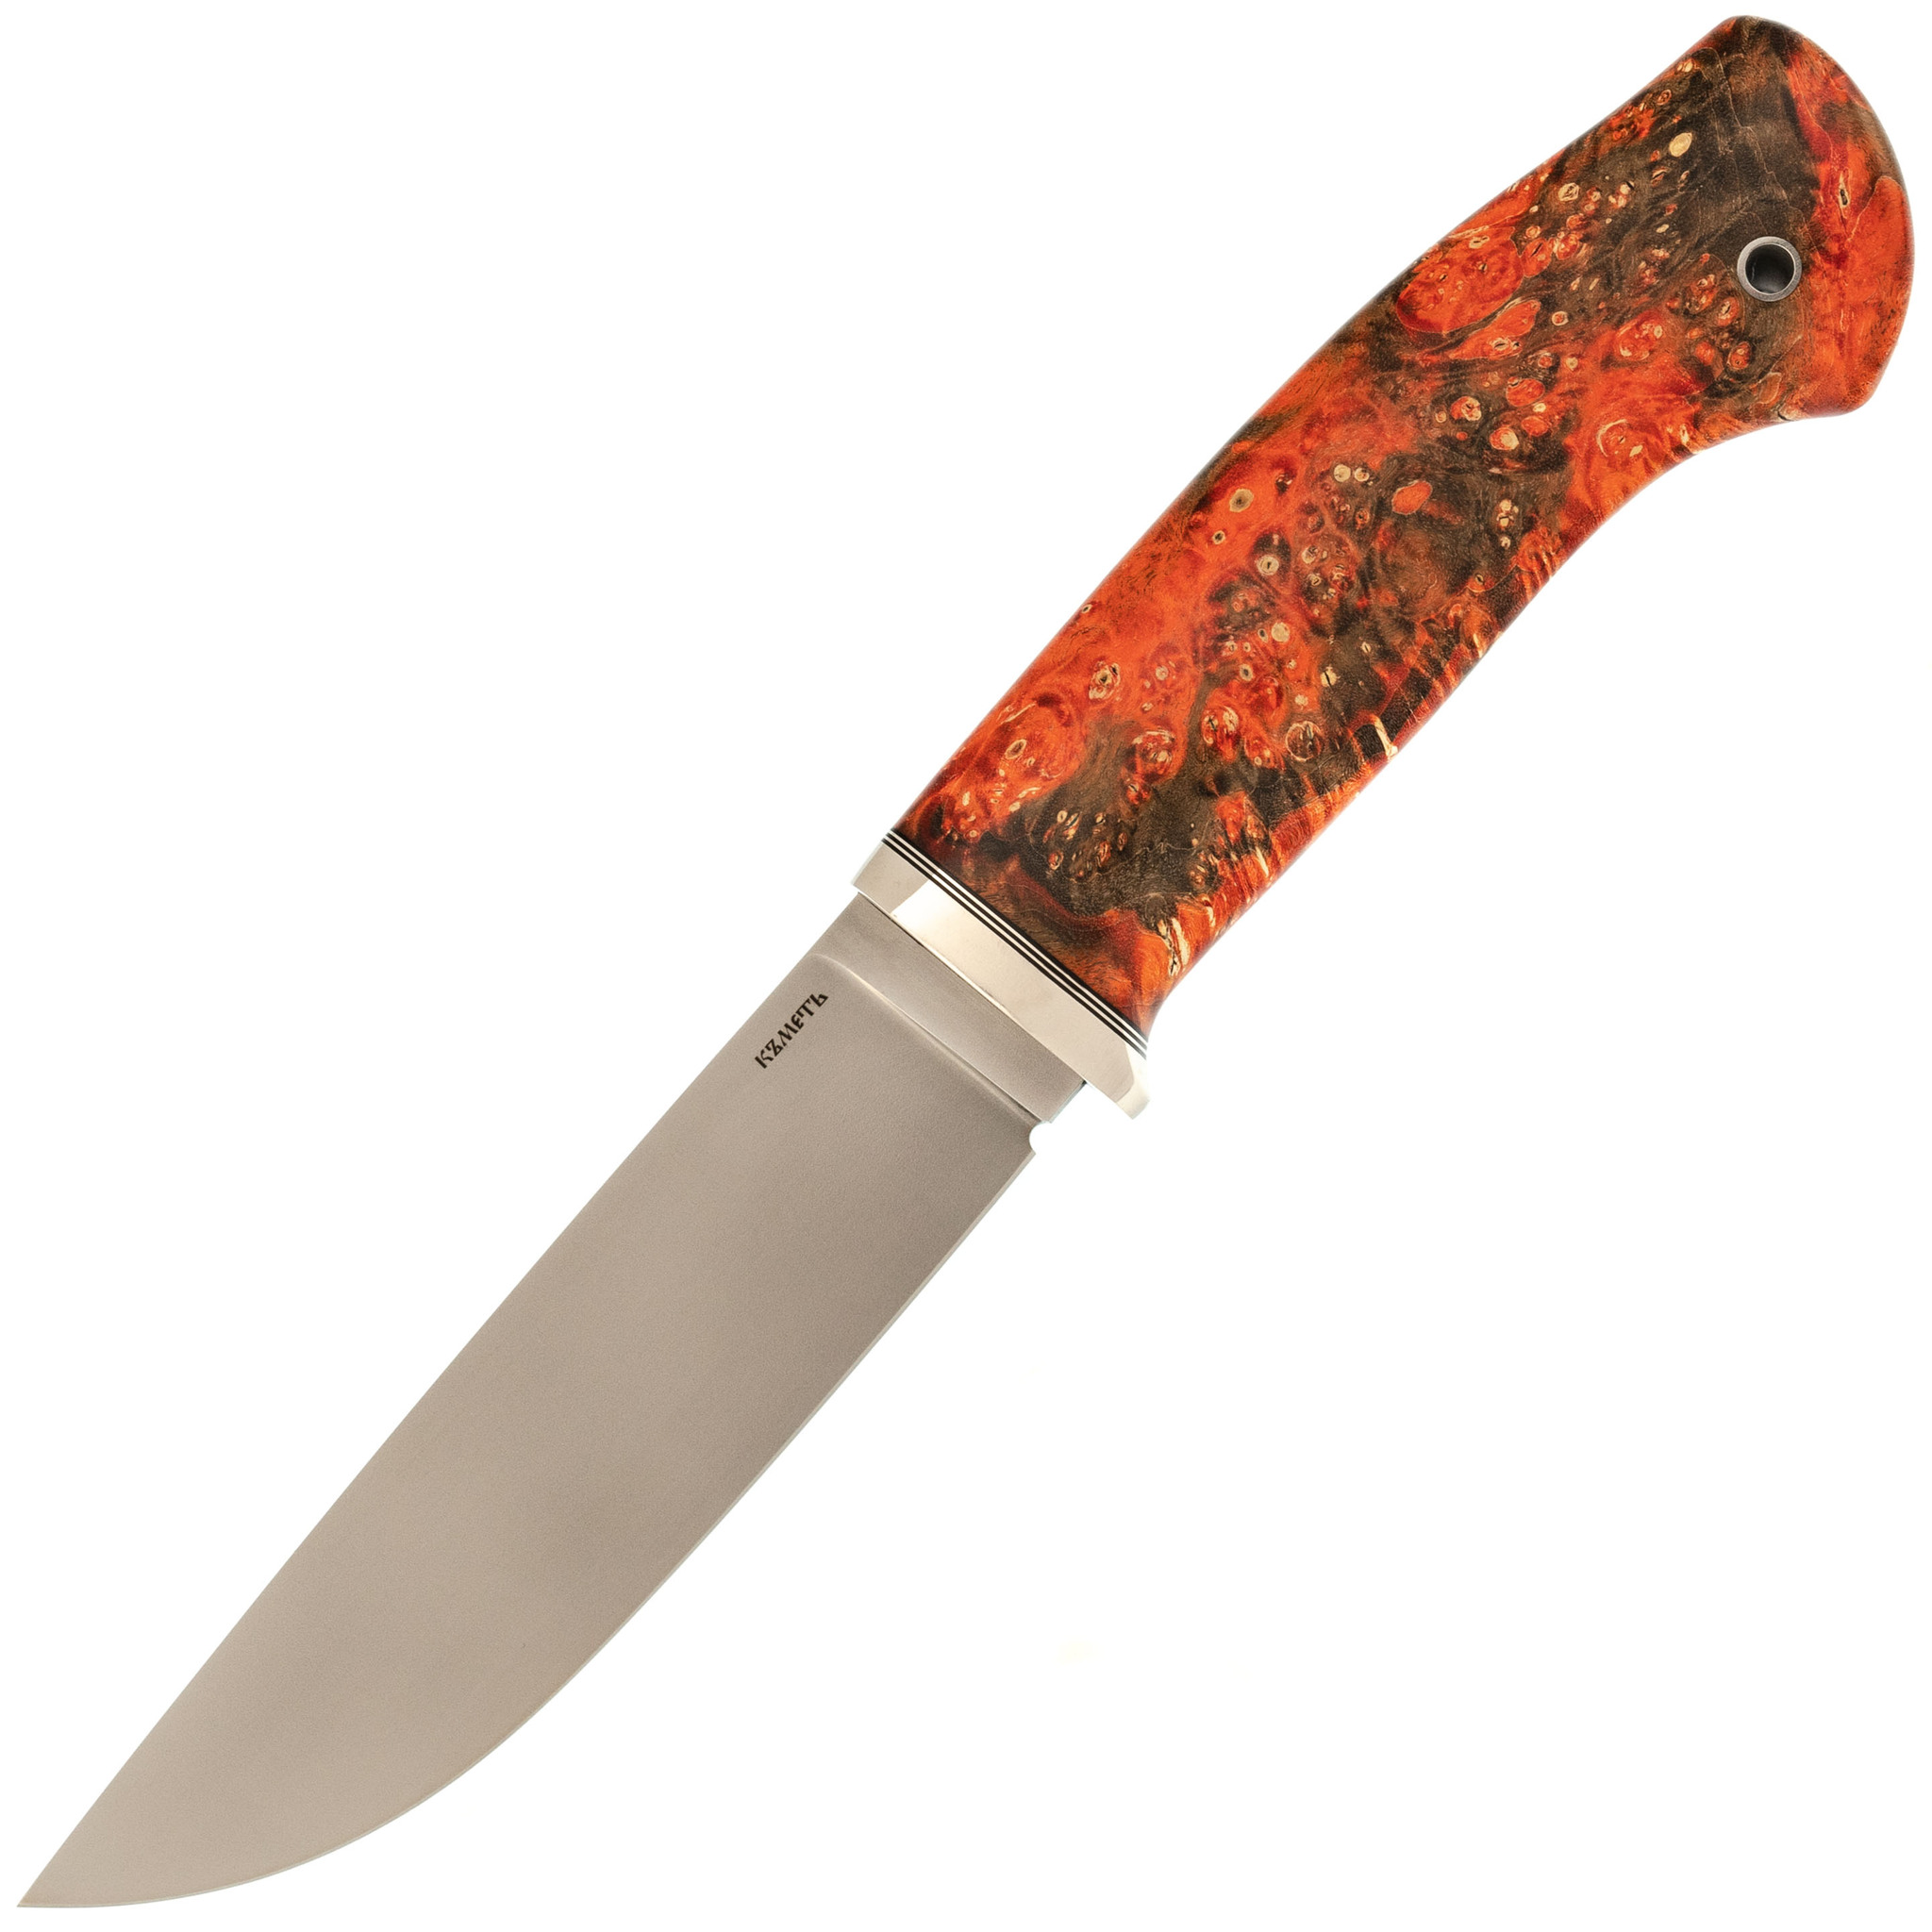 Нож Панцуй, Bohler S110V, карельская береза - фото 1